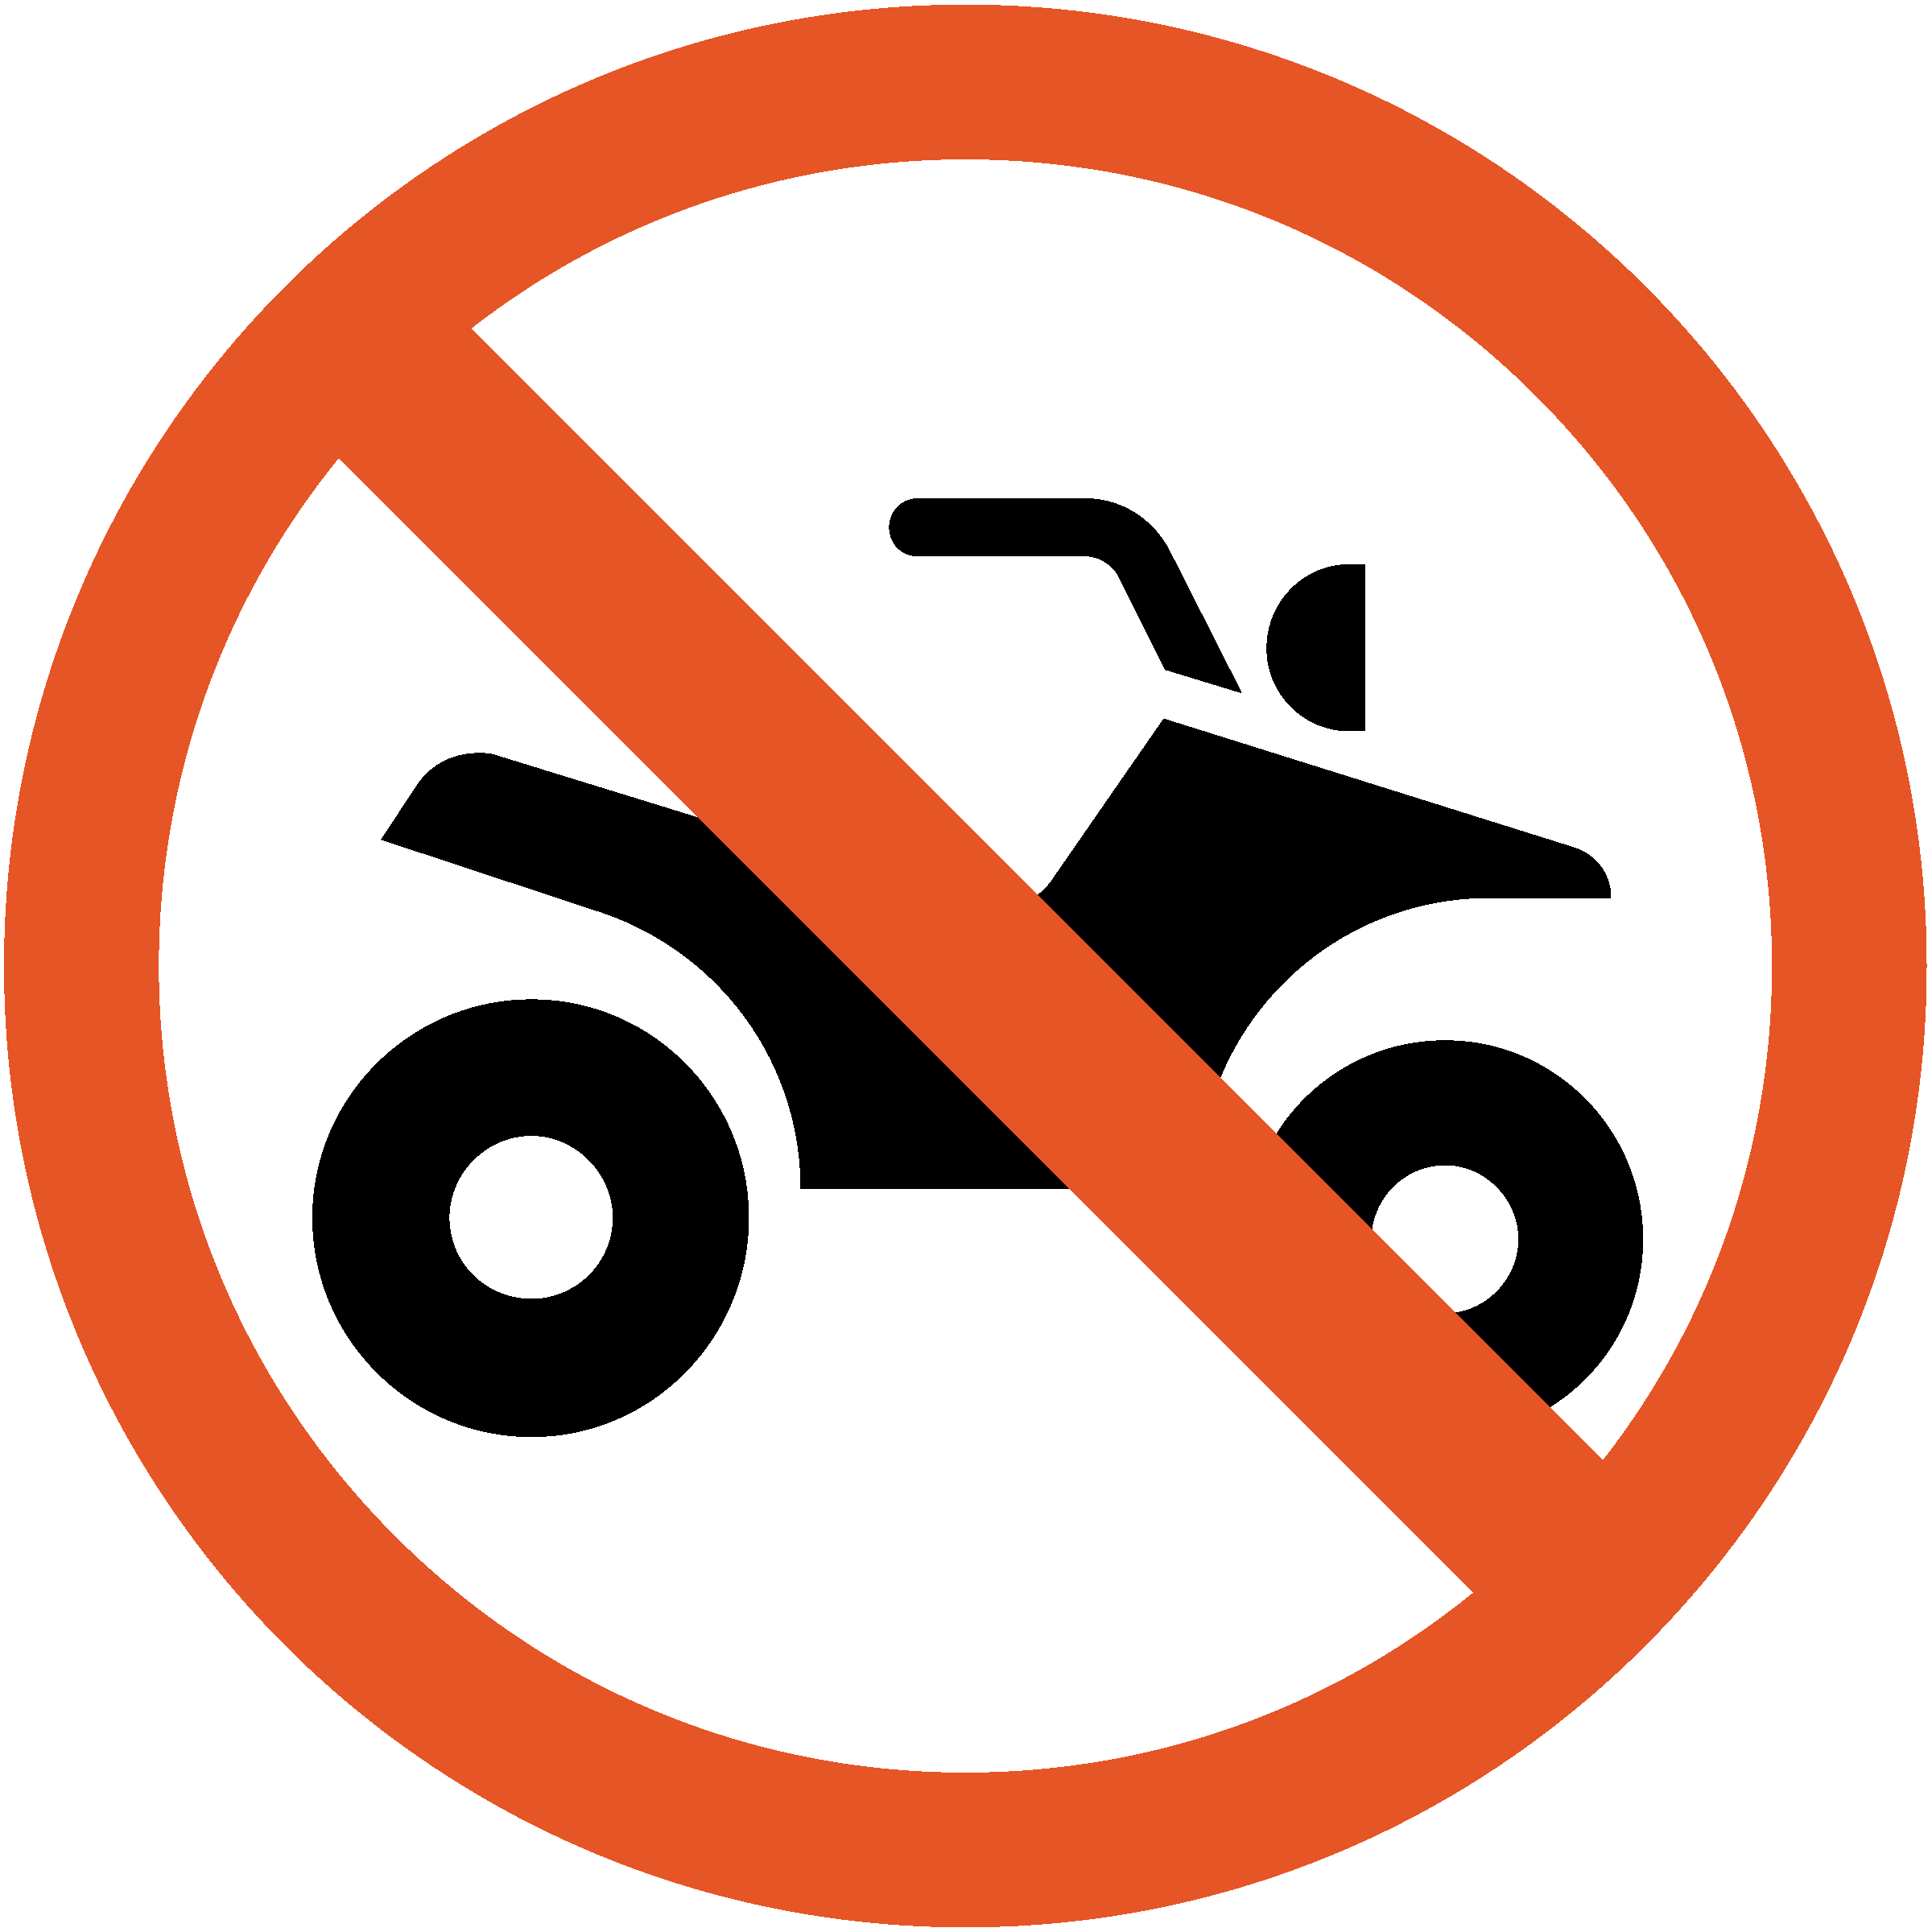 icon of no symbol over image of All Terrain Vehicle (ATV)